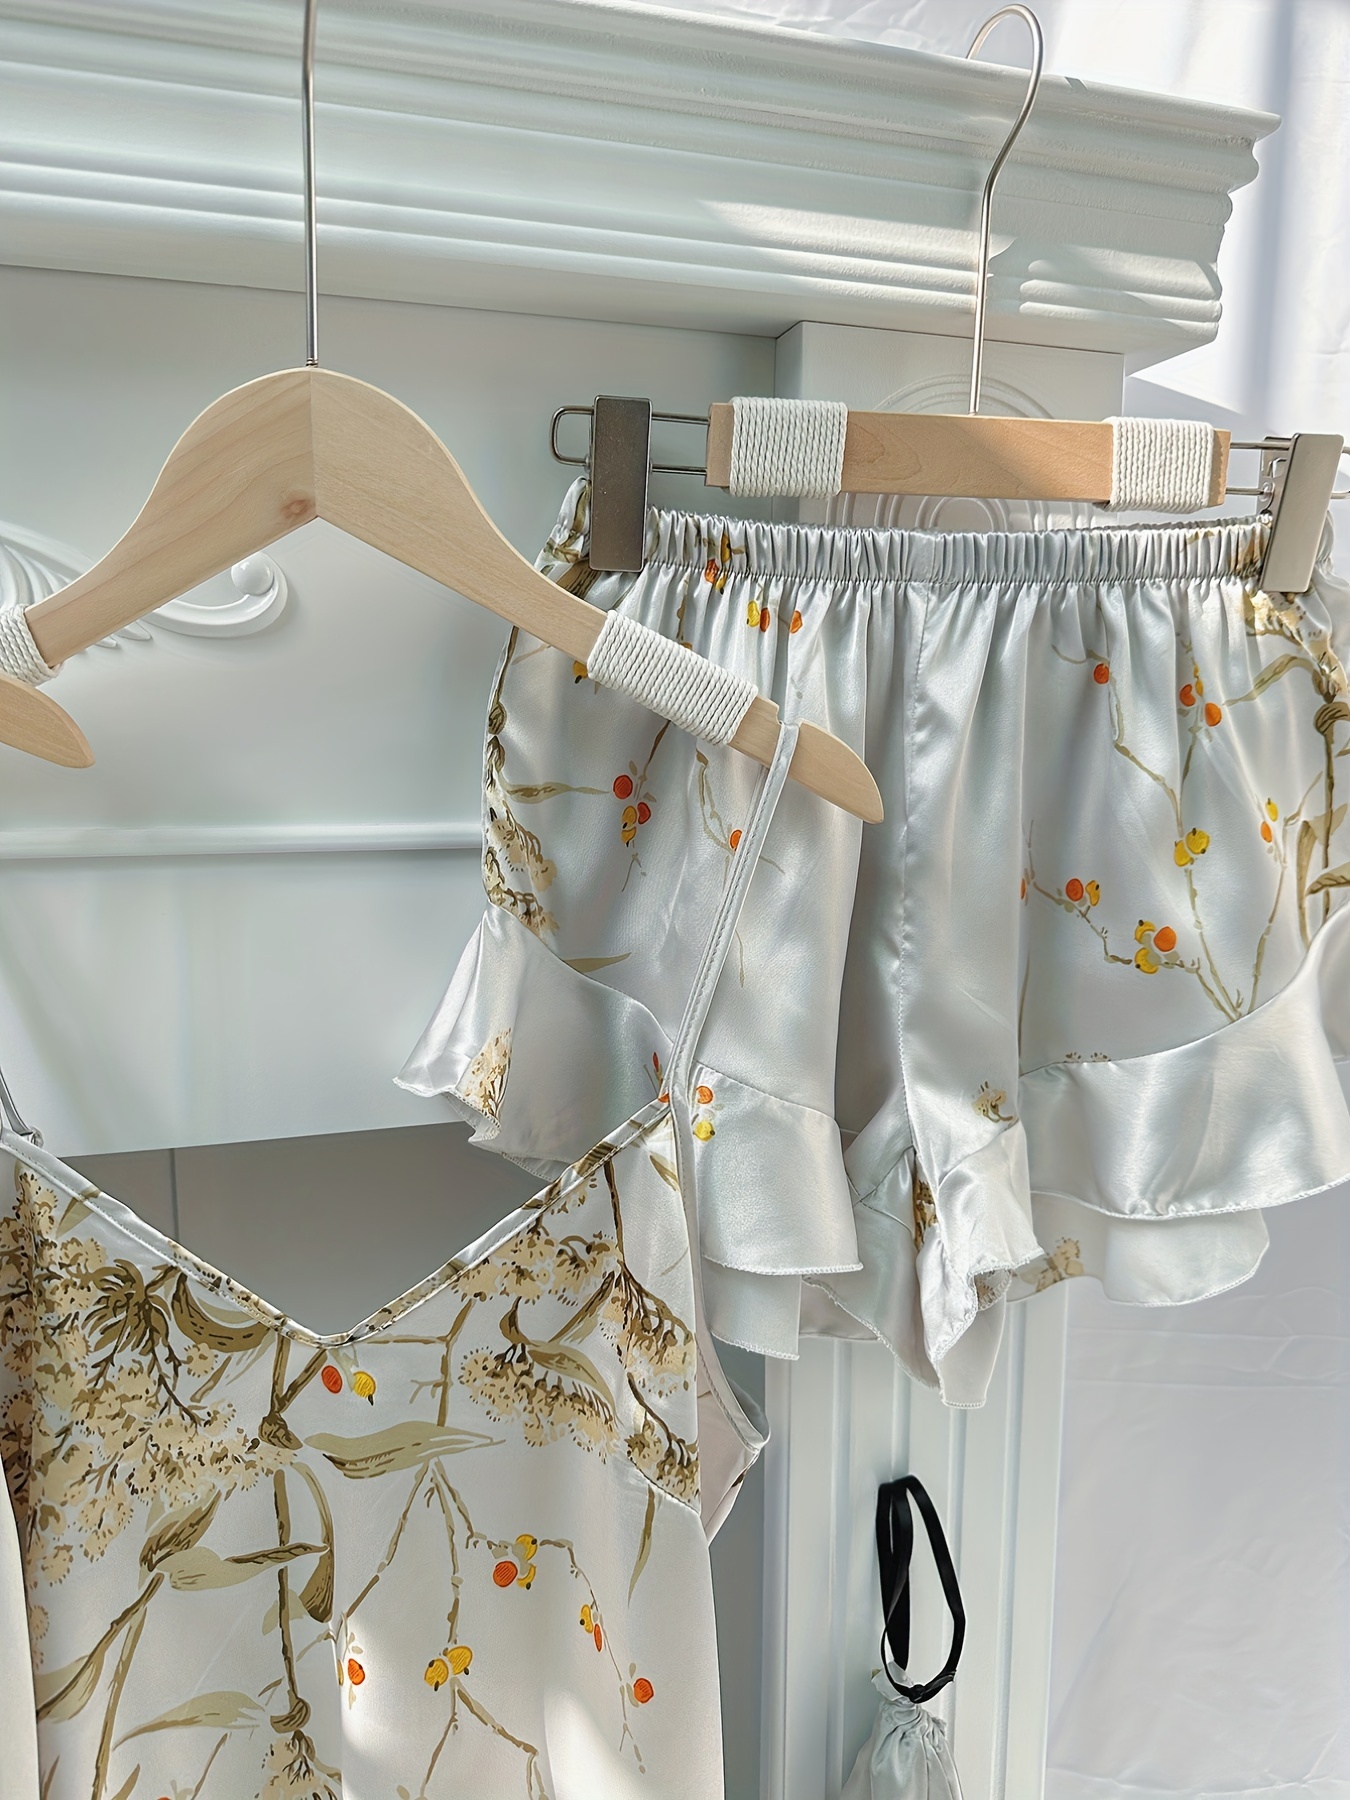 Avamo Mens Fashion Floral Print Stain Silk Pajamas Set Long Sleeve Sleepwear  Shirts and Pants Lounge Bath Homewear Nightwear 